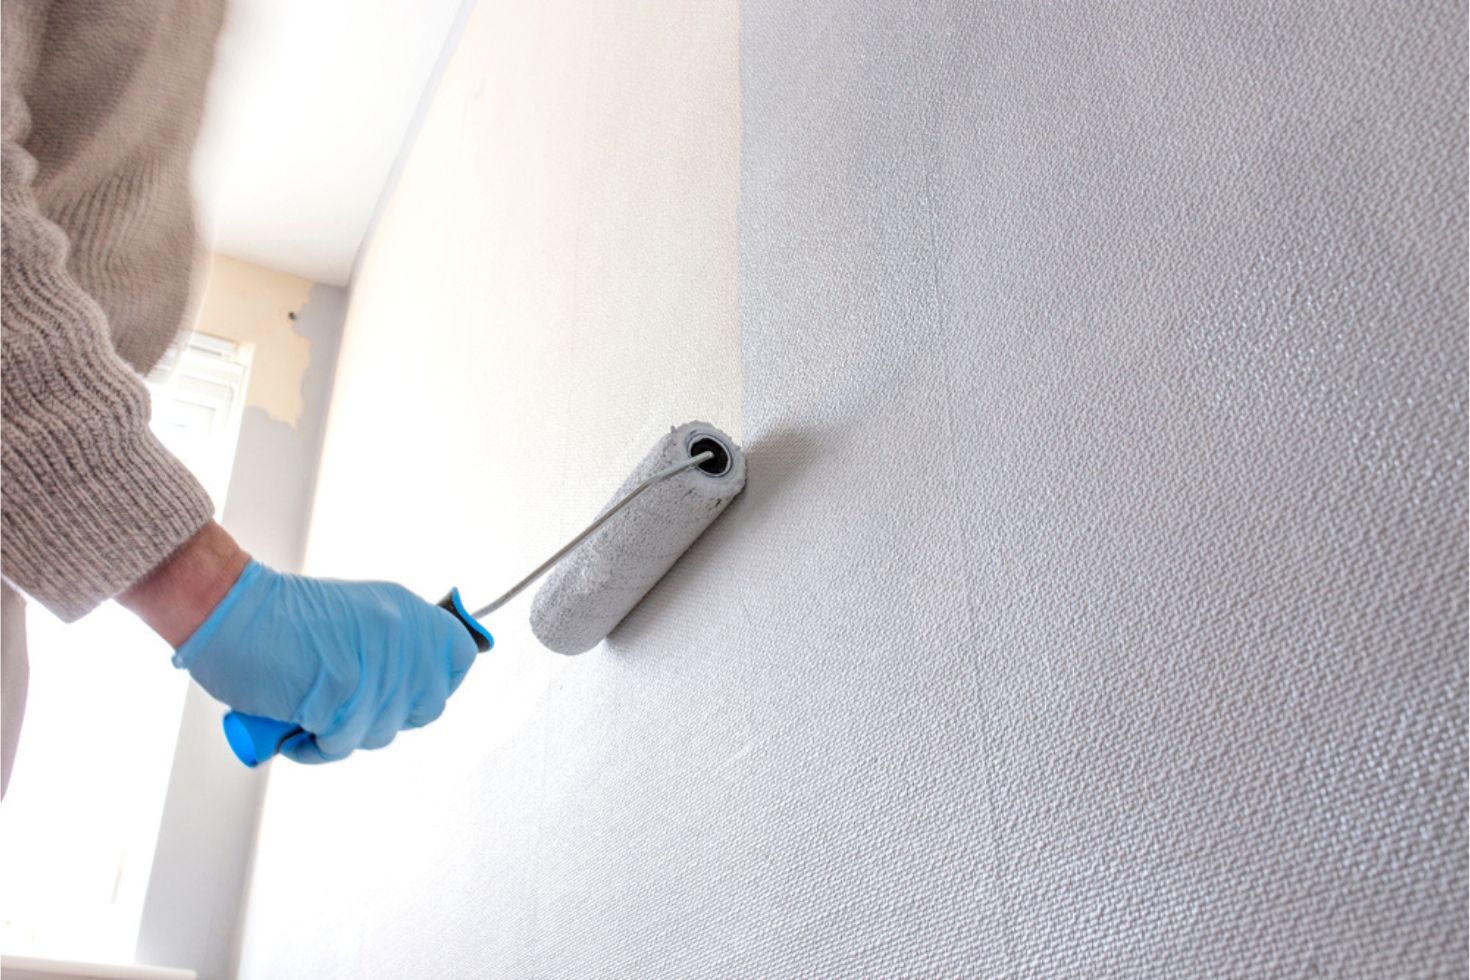 Jackalope Wallpaper Bathroom  DIY Smooth Textured Walls